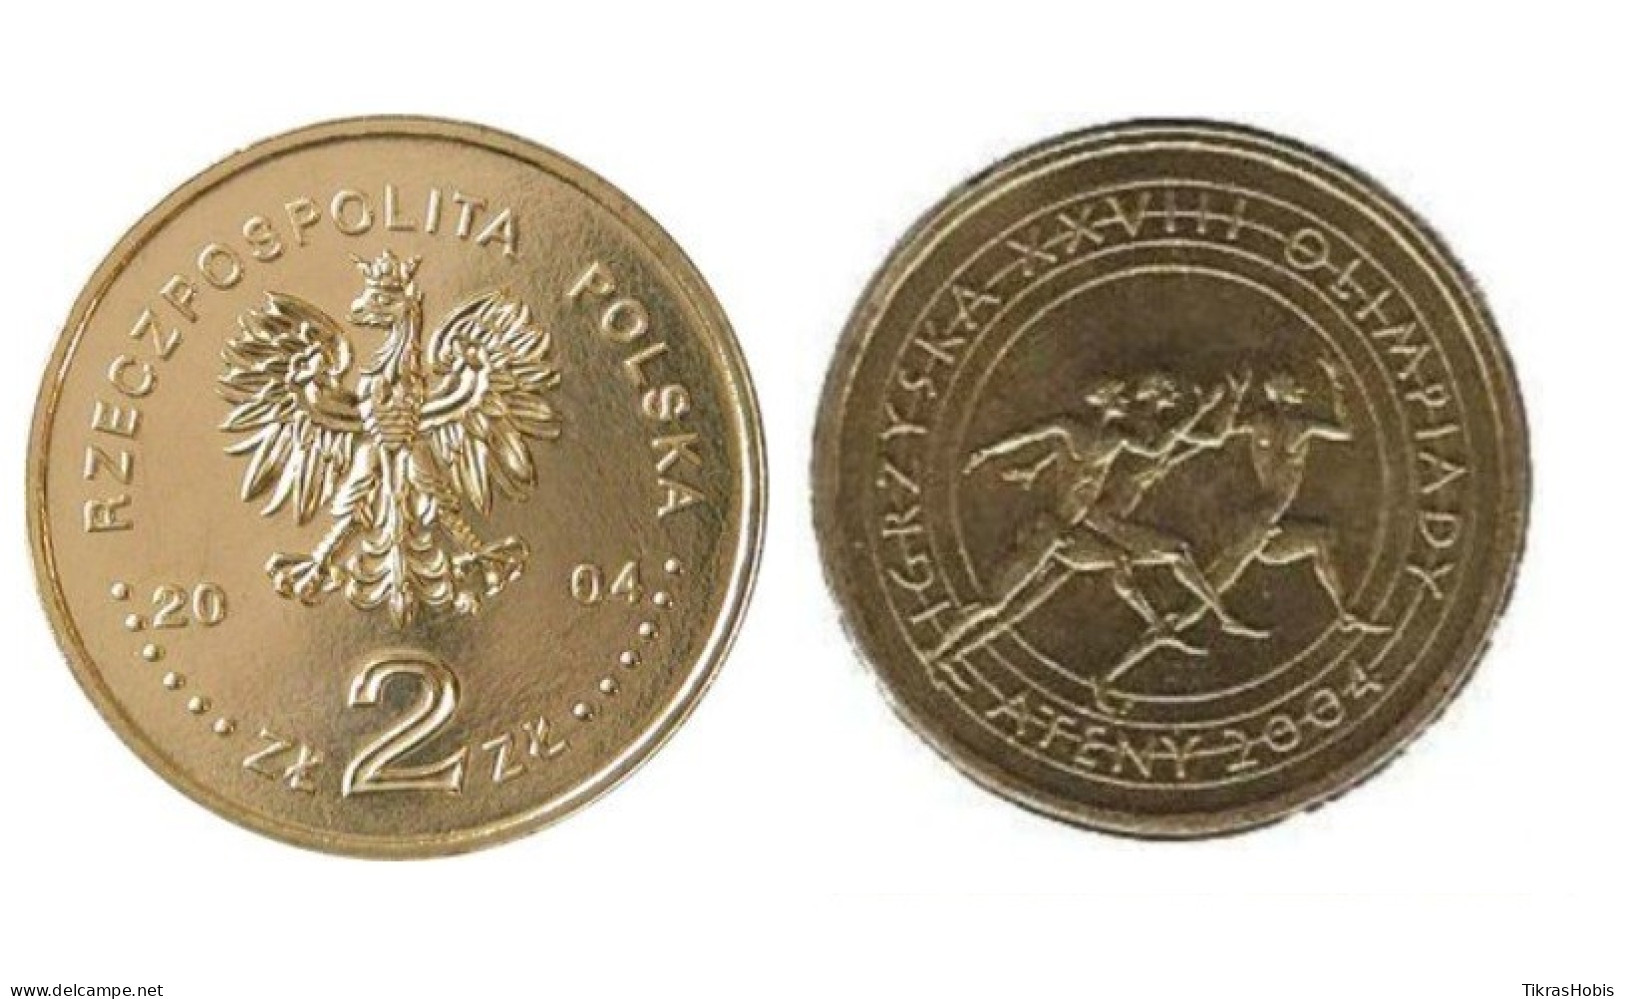 Poland 2 Zlotys, 2004 Athens Y516 - Poland